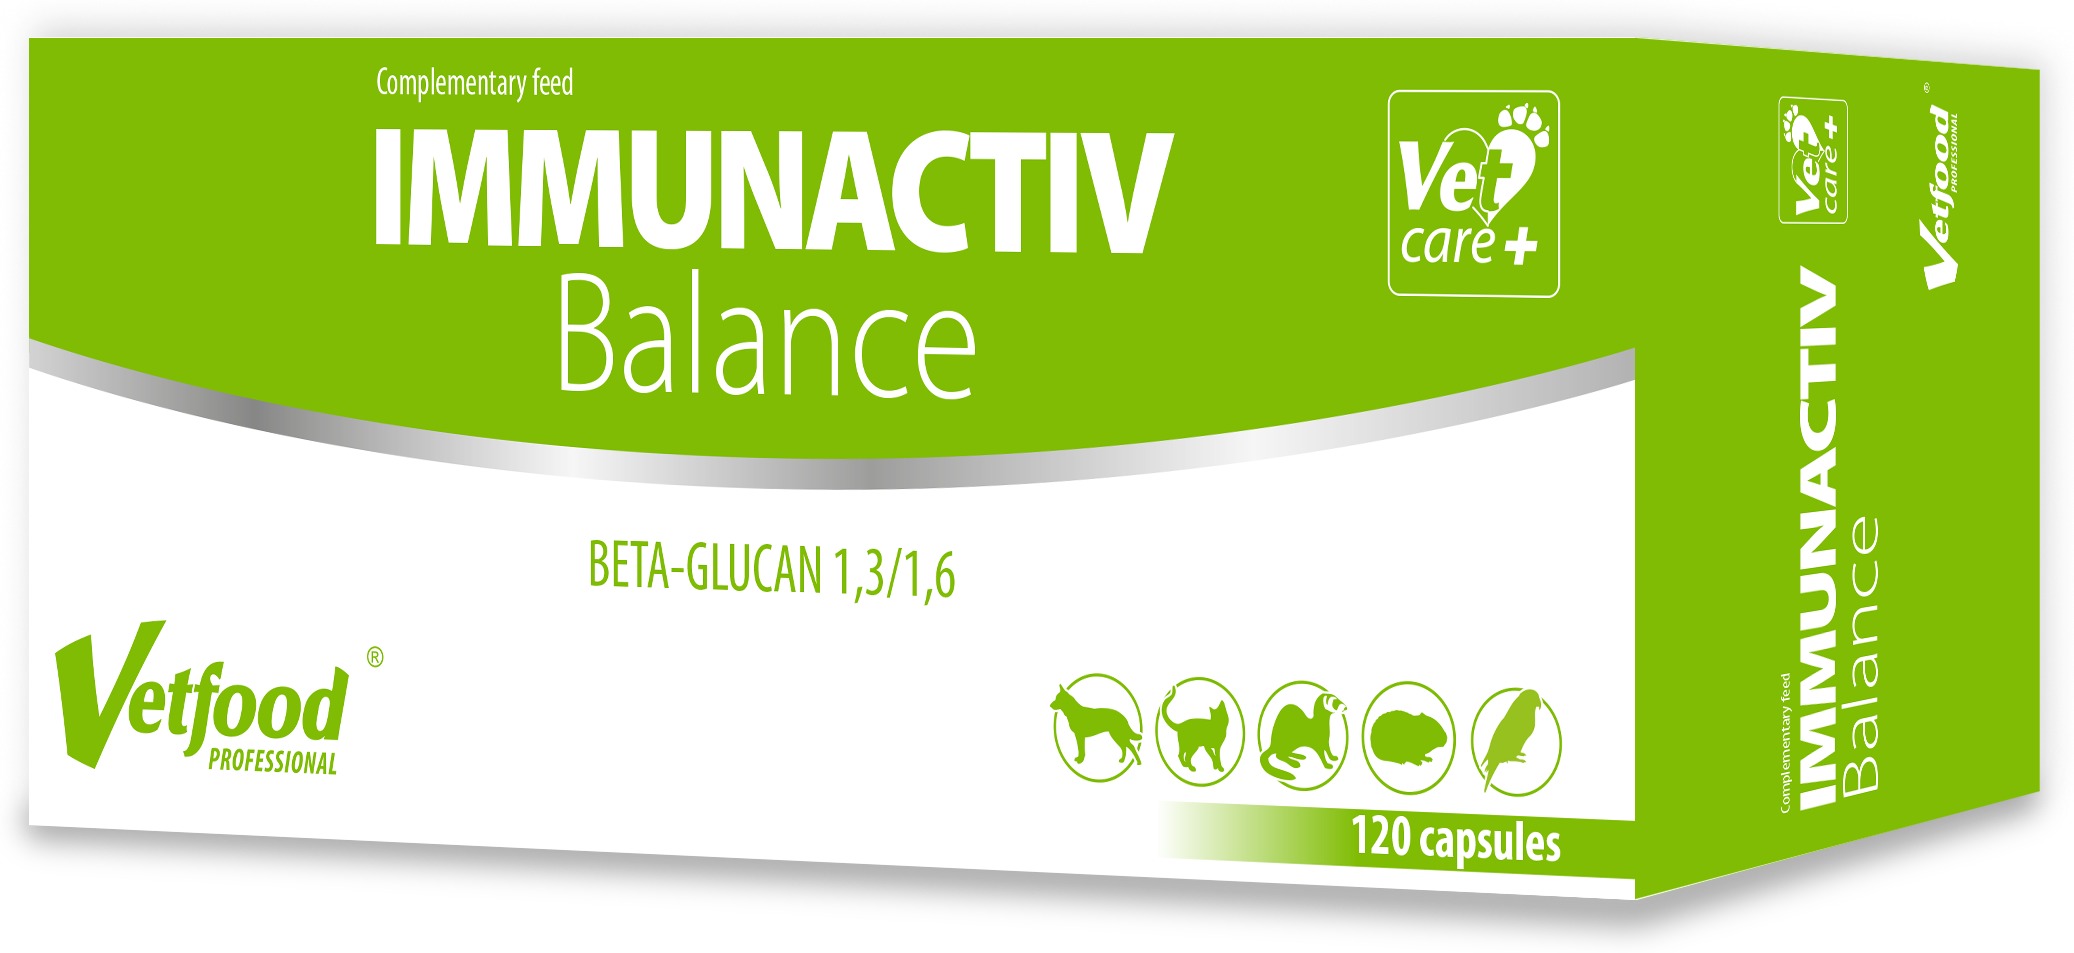 VetFood ImmunActive Balance - Pentru susținerea imunității